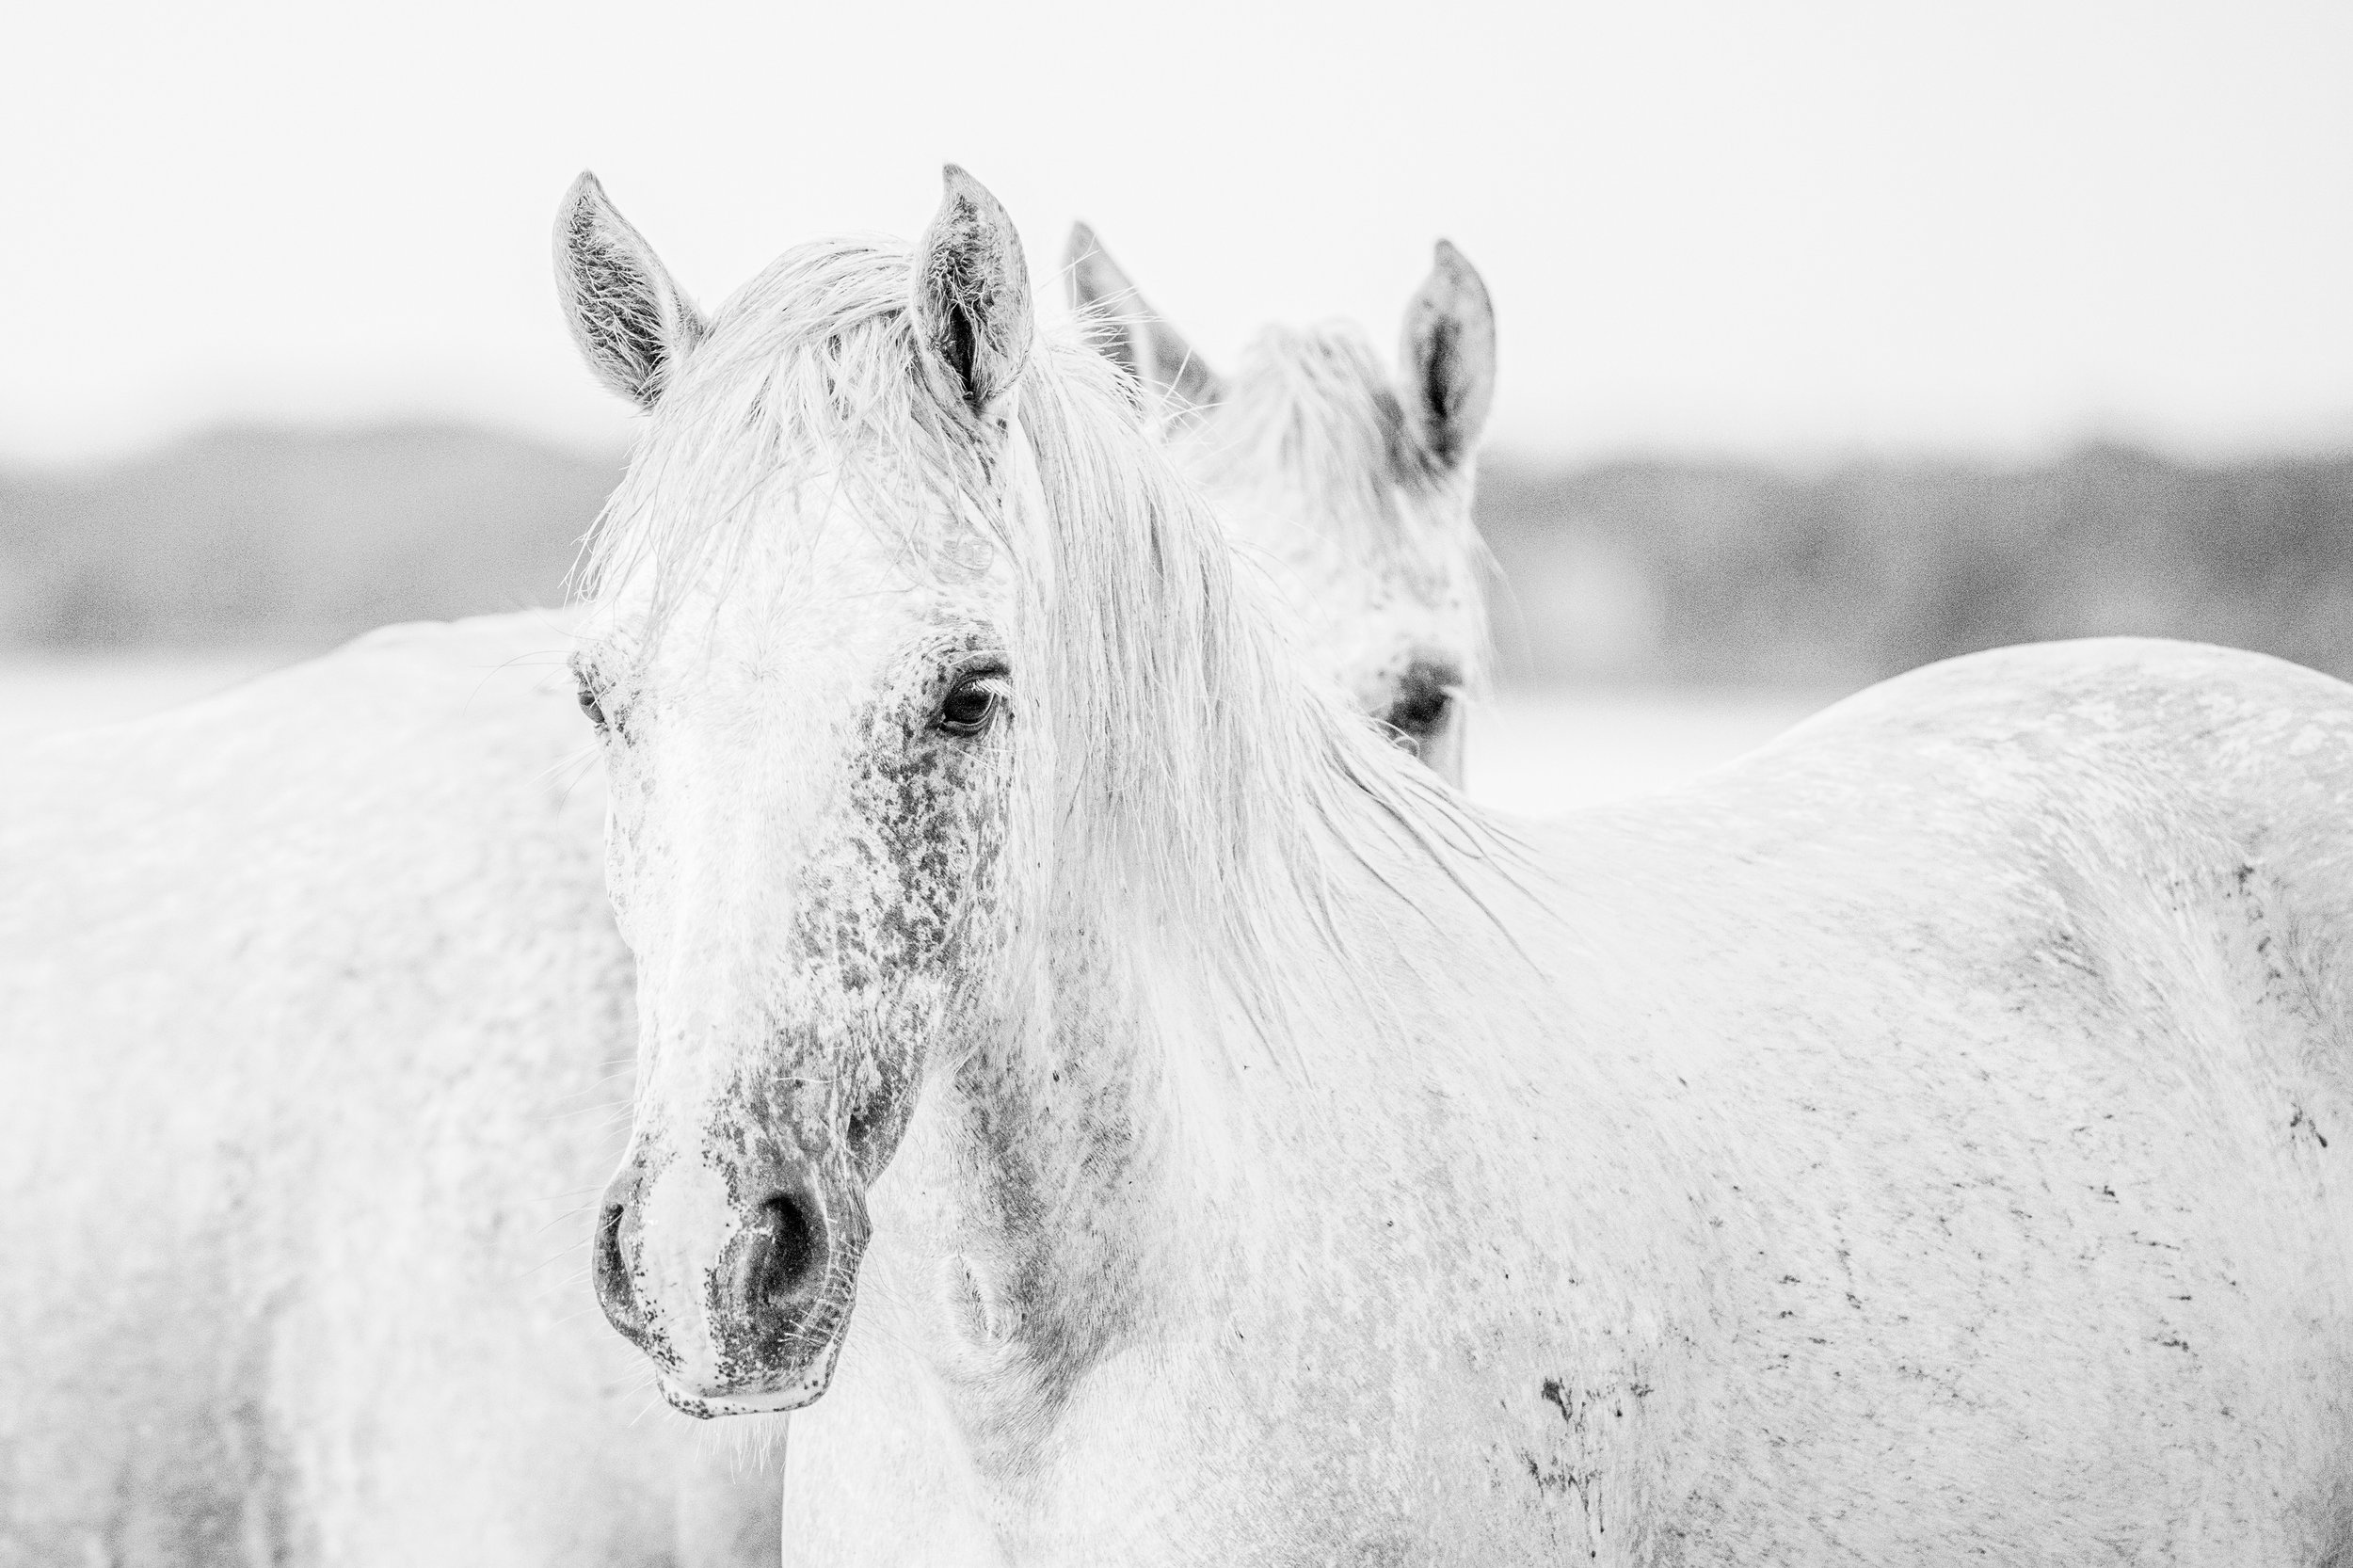 Fine art print of two white horses